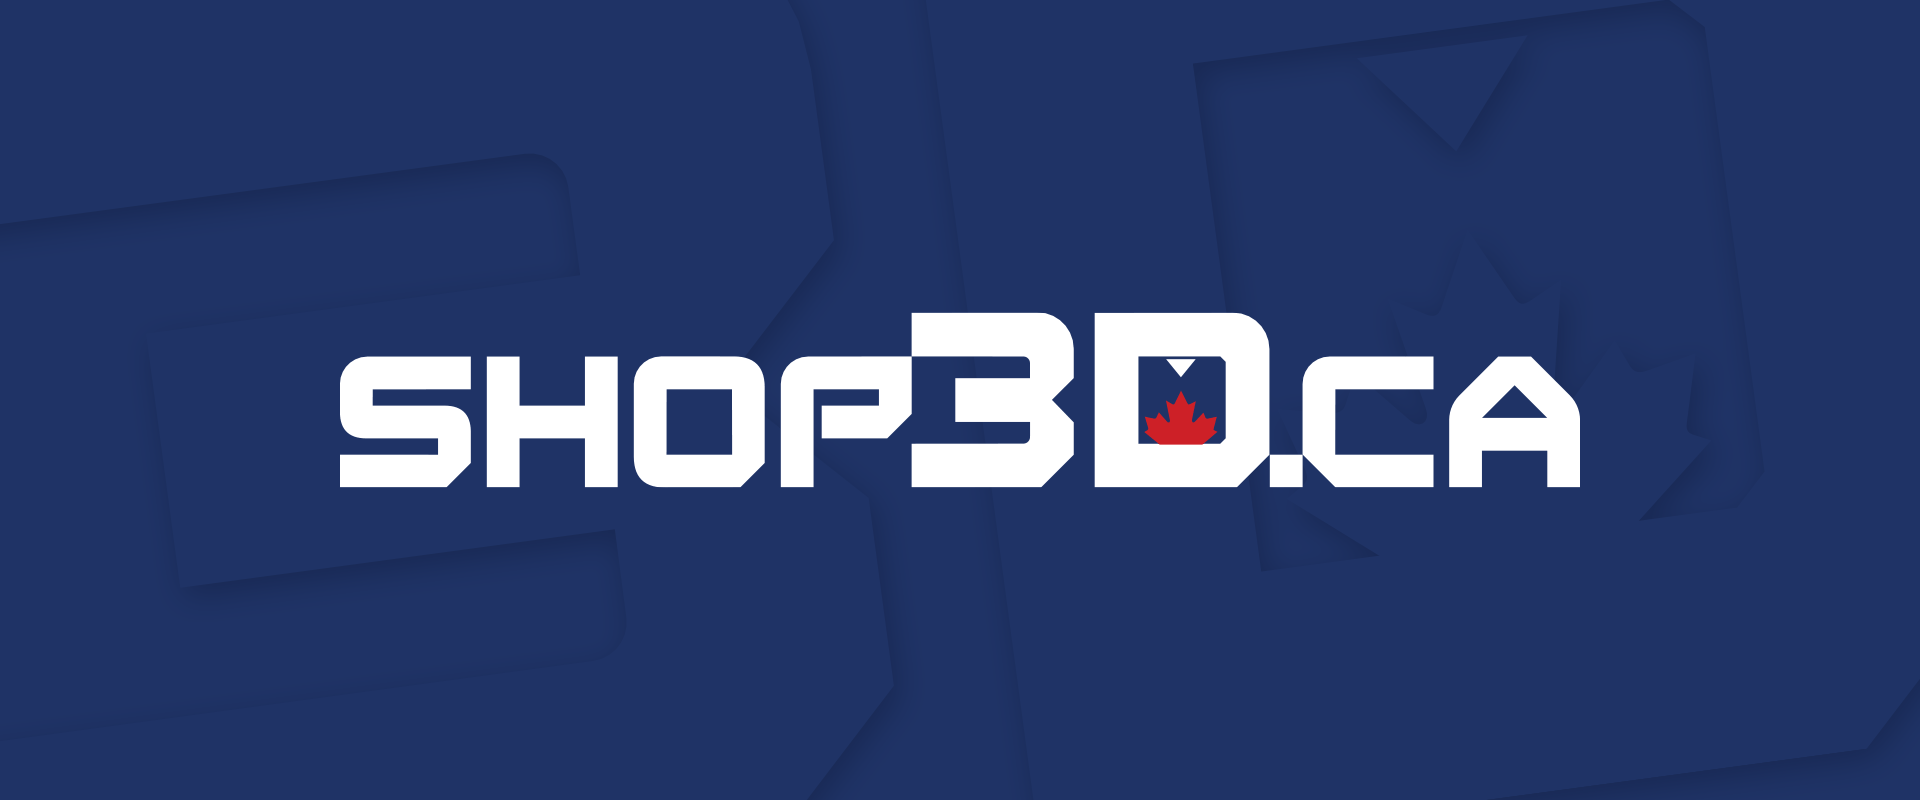 Shop3D logo